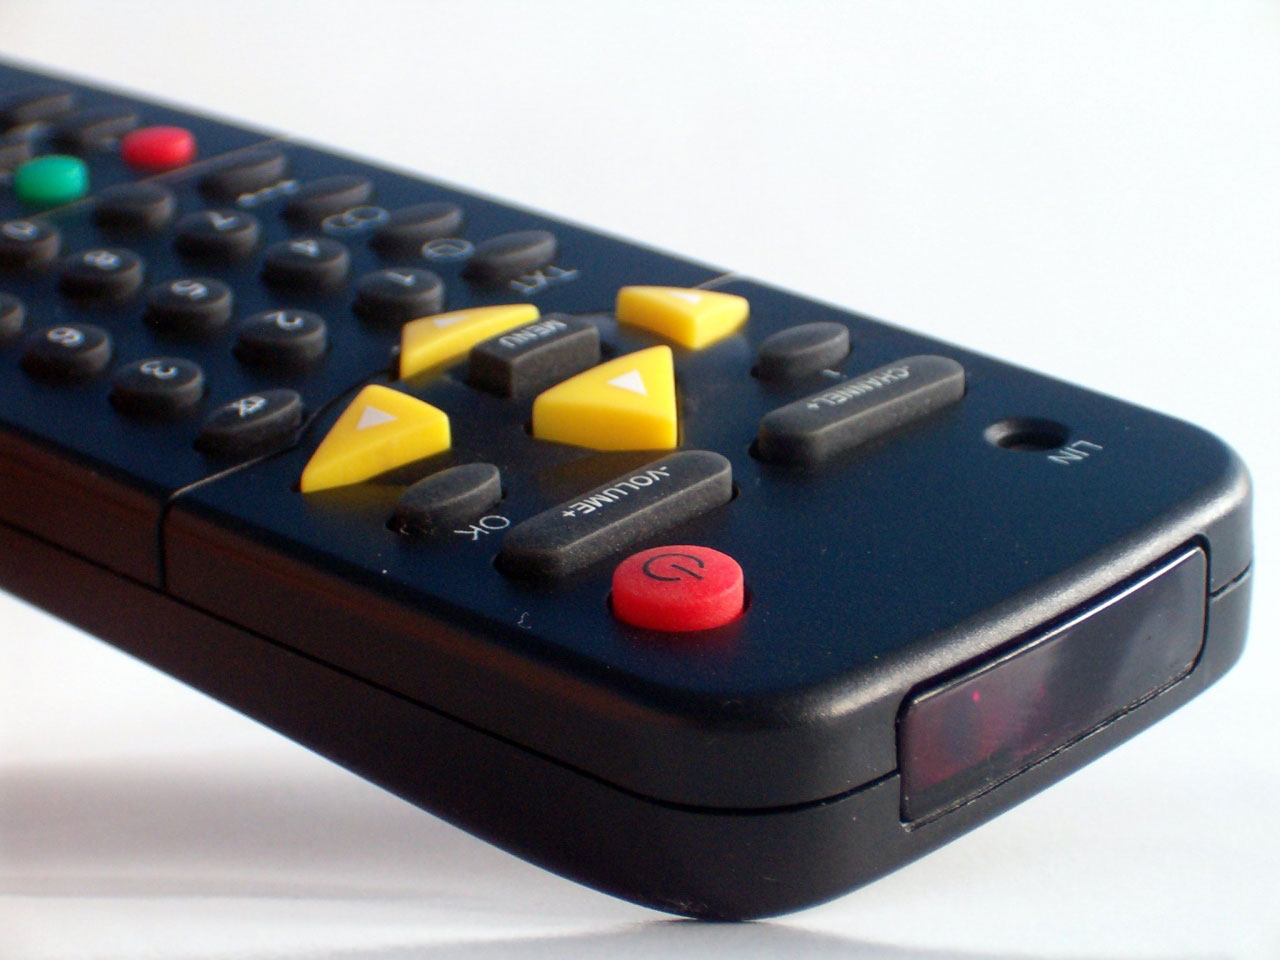 TV remote controller